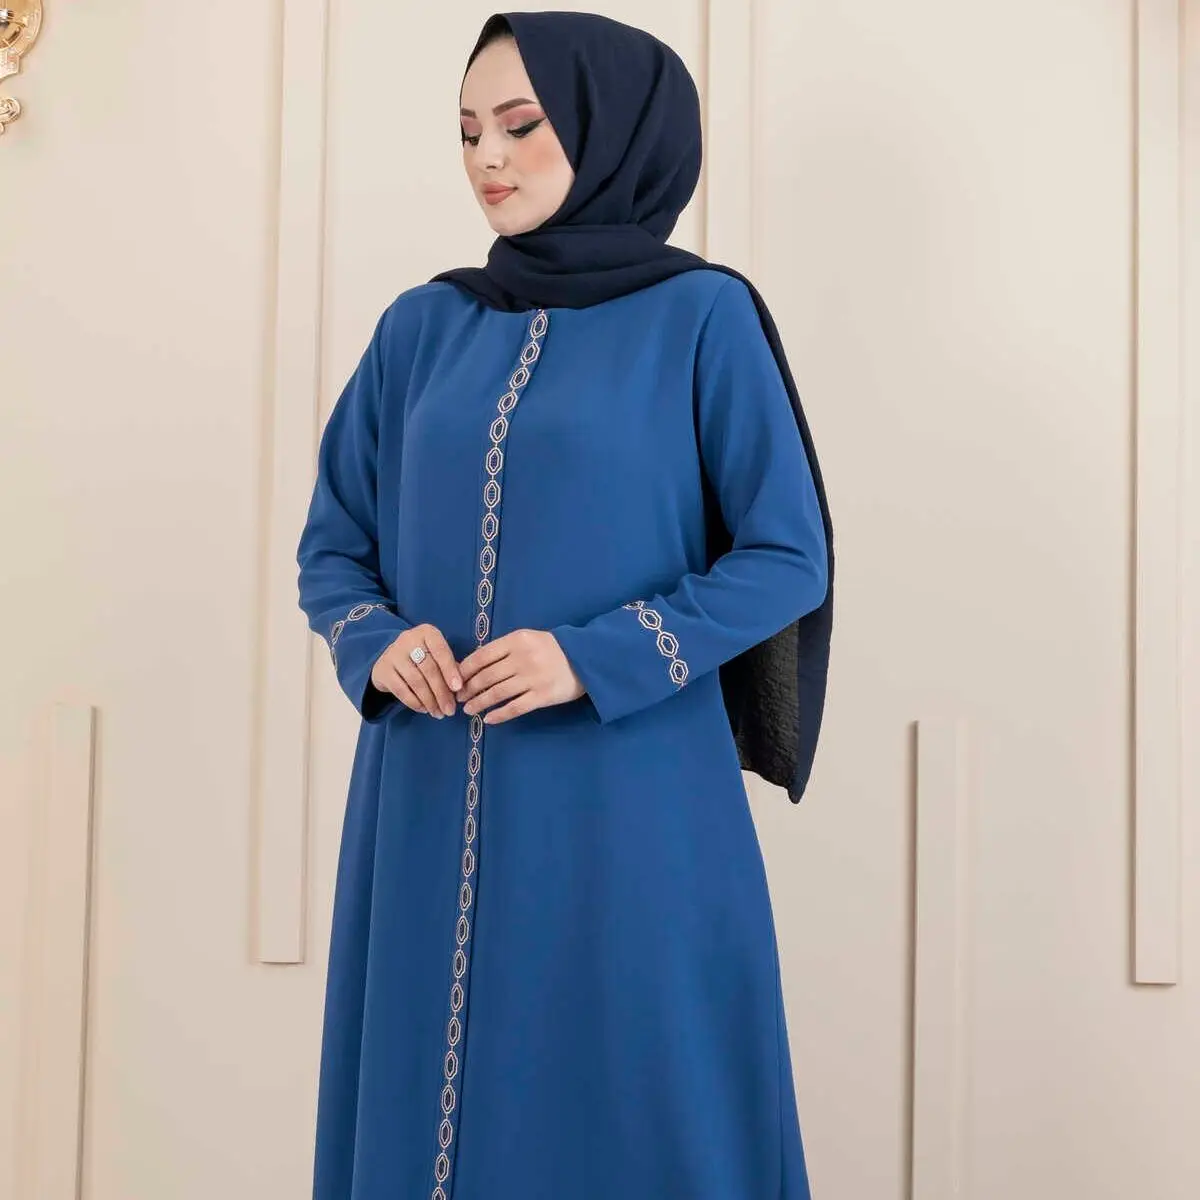 Embroidered Stone Detailed Hijab Abaya Dress Turkey Muslim Fashion Islam Clothing Dubai Istanbul Istanbulstyles 2022